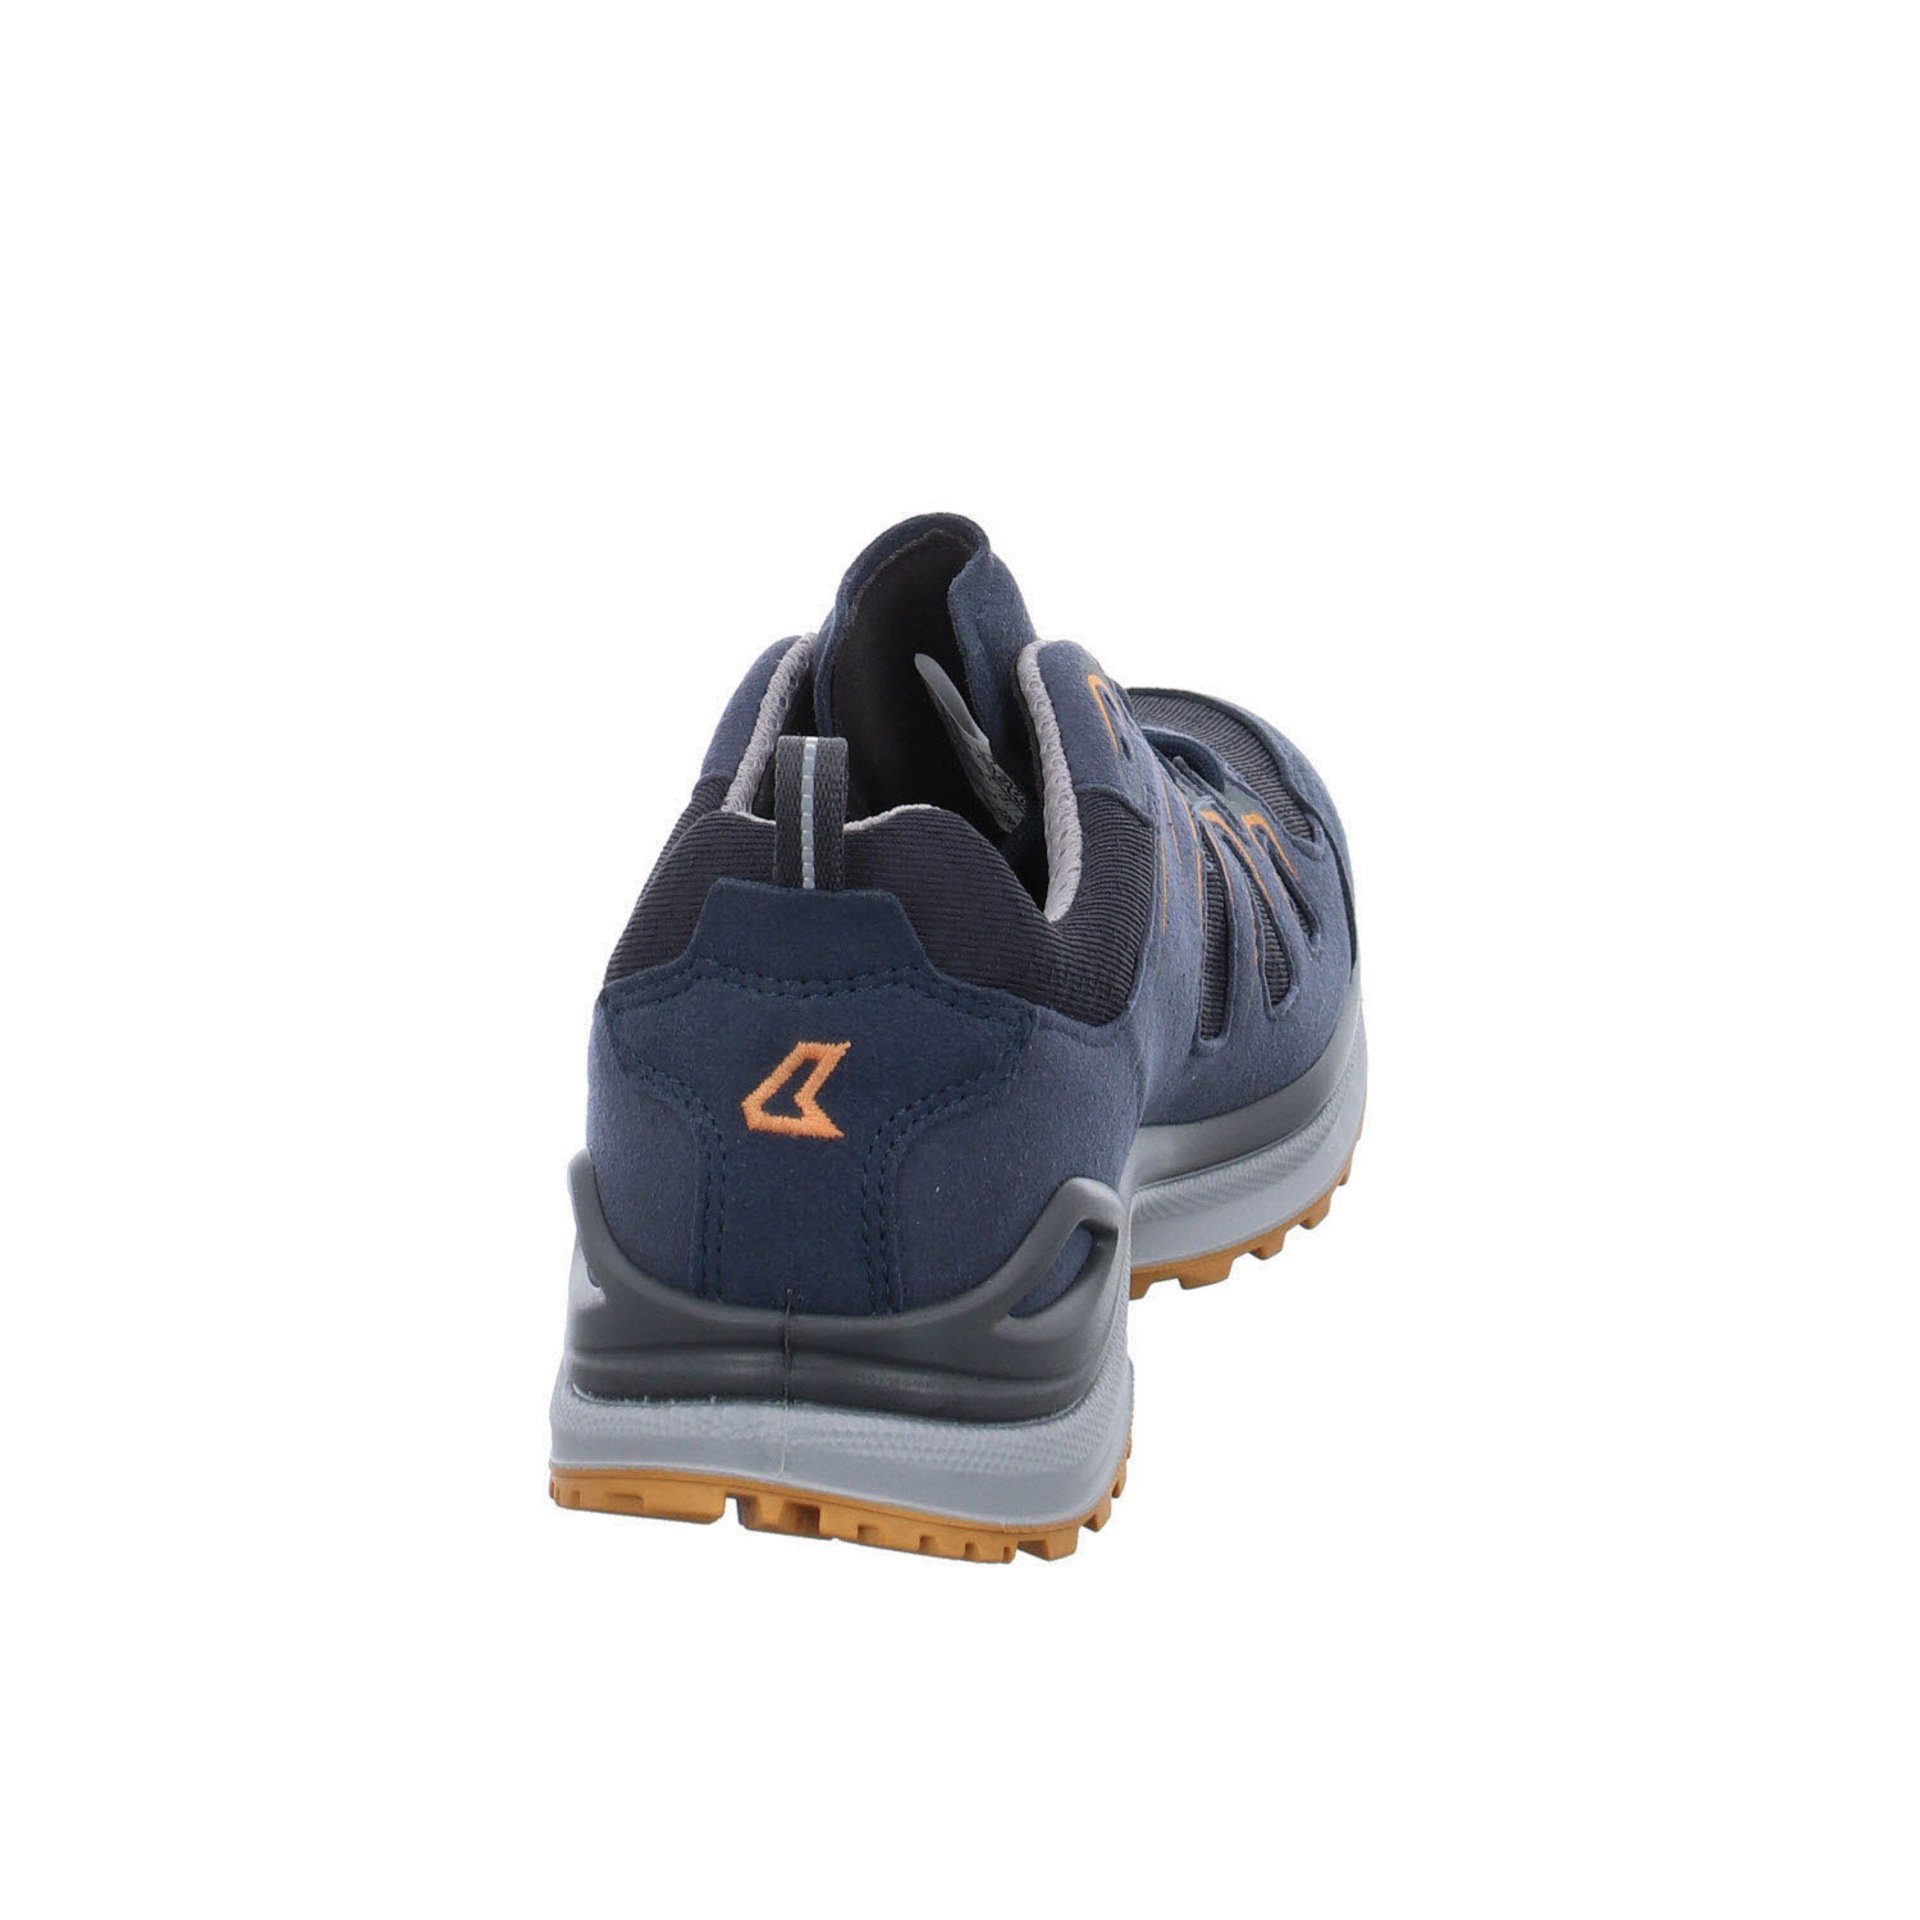 stahlblau/marine Outdoor Lowa Schuhe Damen Synthetikkombination Lo Innox EVO Outdoorschuh Outdoorschuh